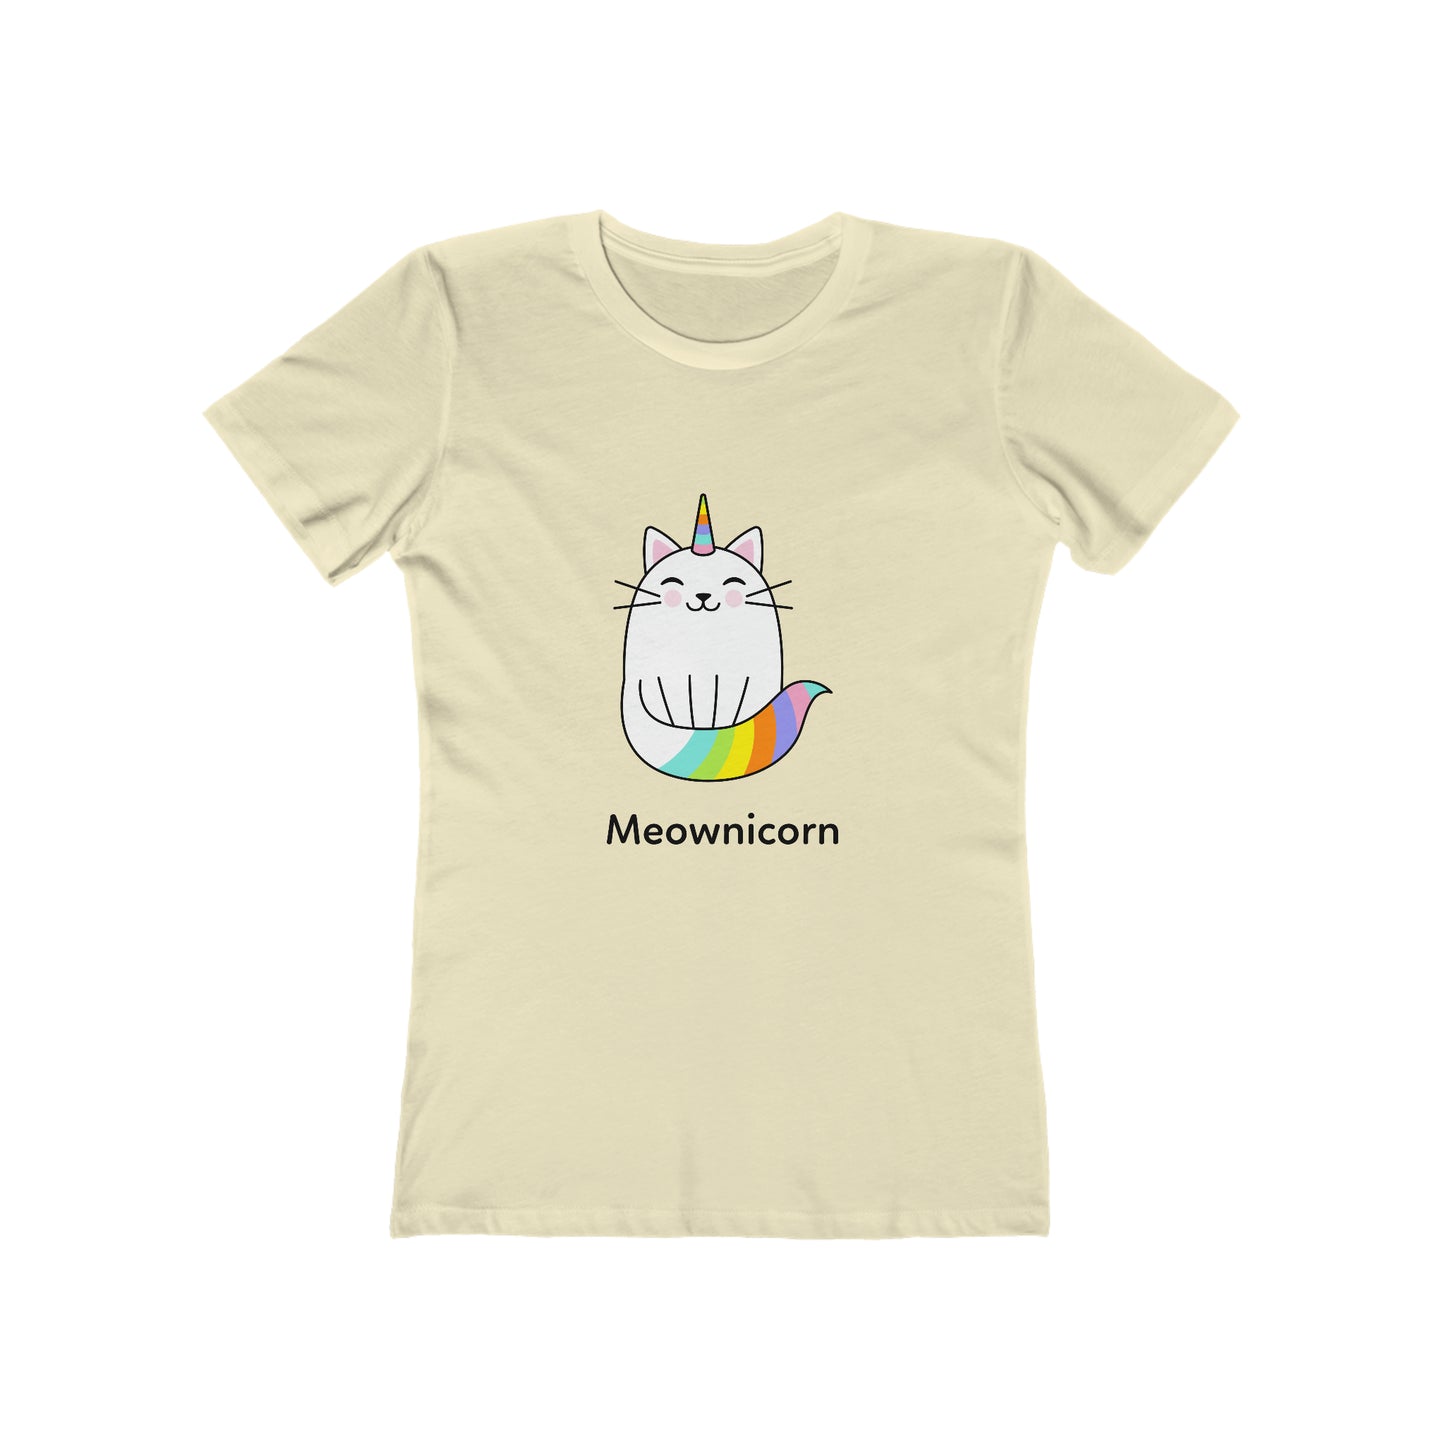 Meownicorn - Women's T-shirt